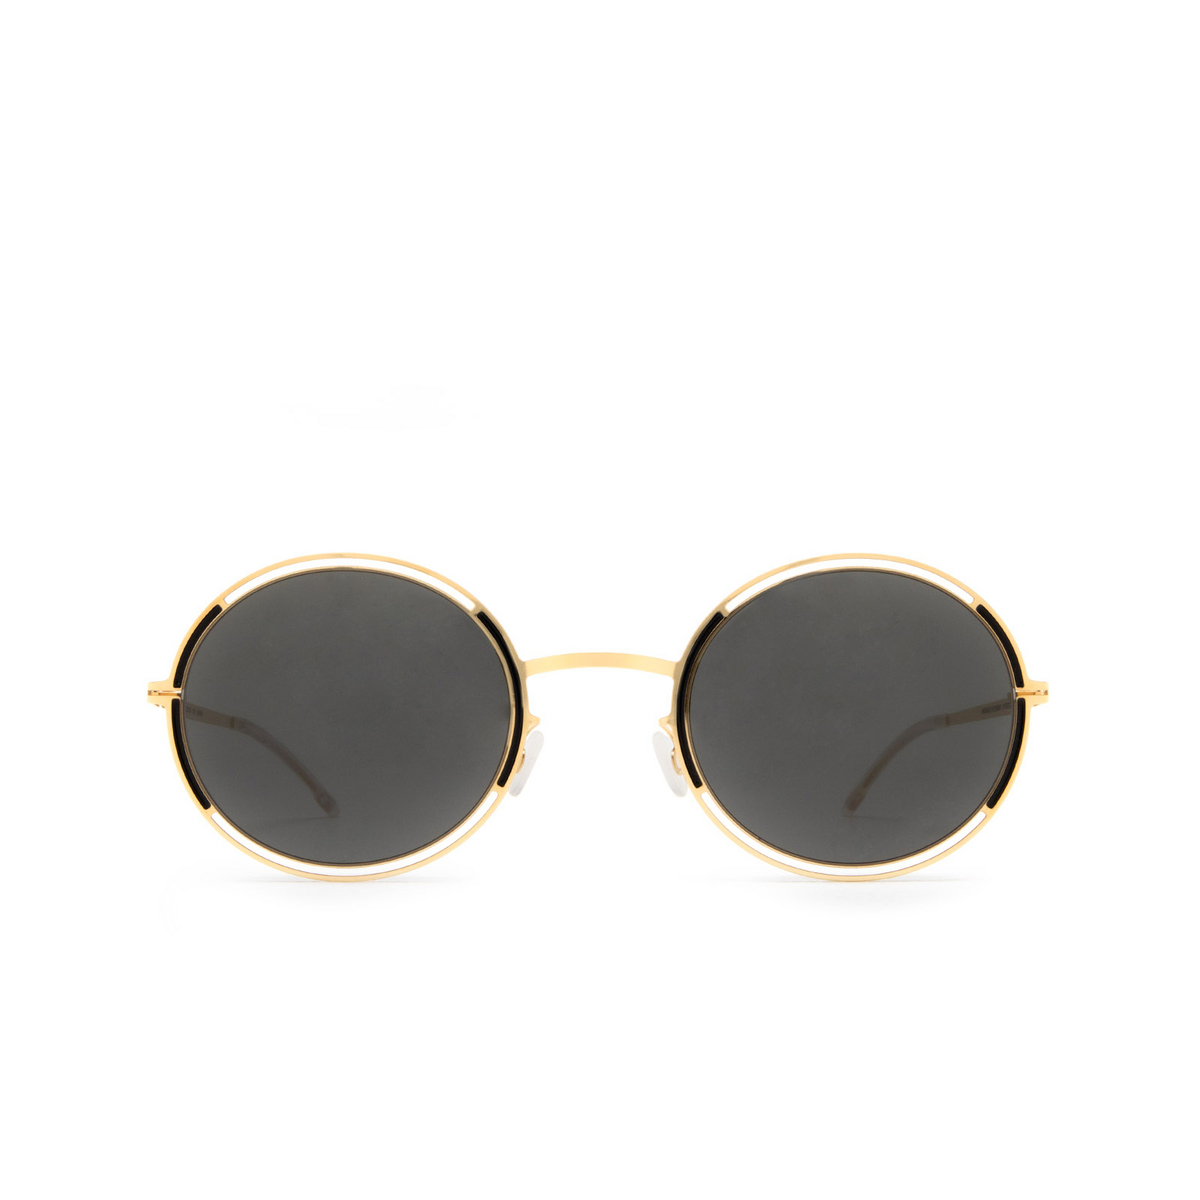 Mykita GISELLE Sunglasses 167 Gold/Jet Black - front view